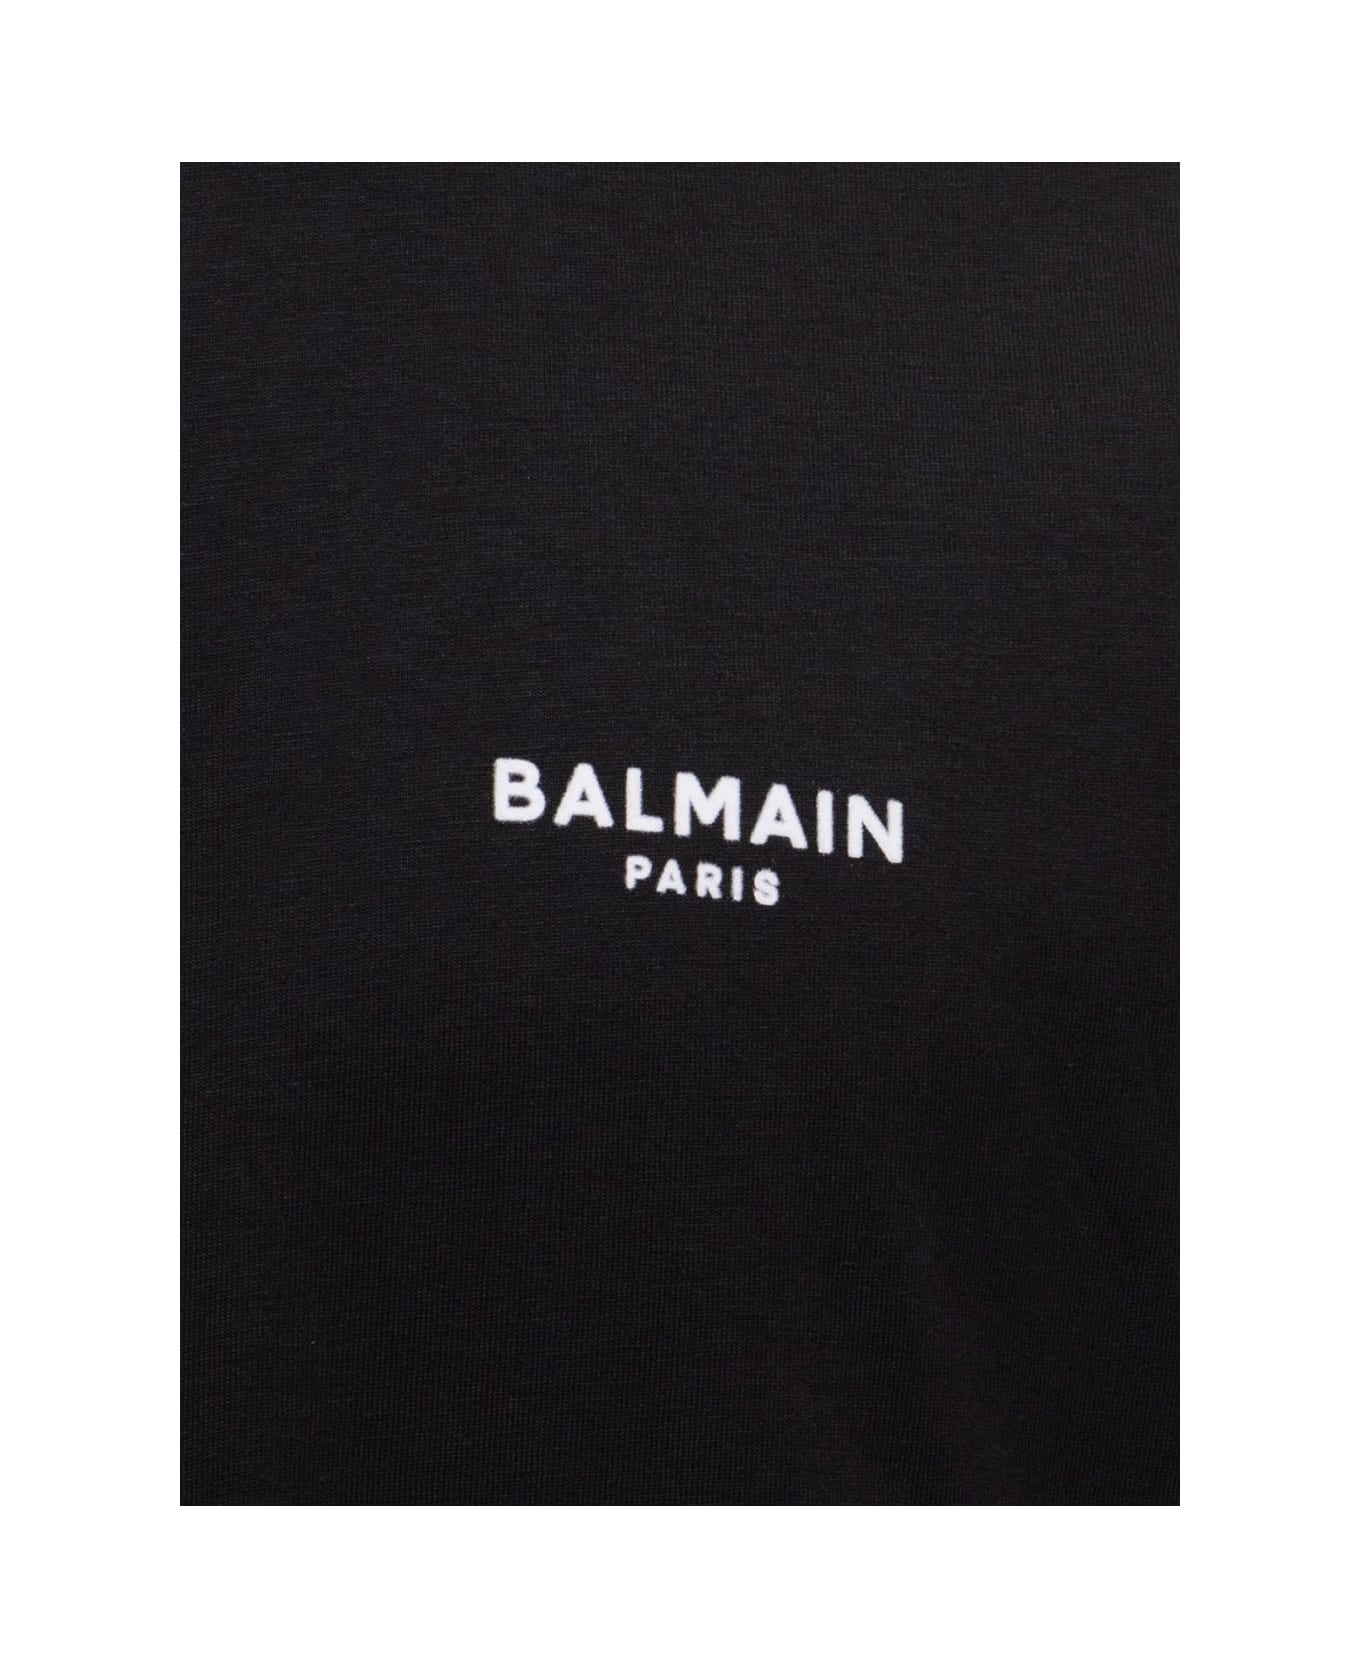 Balmain Black T-shirt With Flock Logo In Cotton Man - Black シャツ